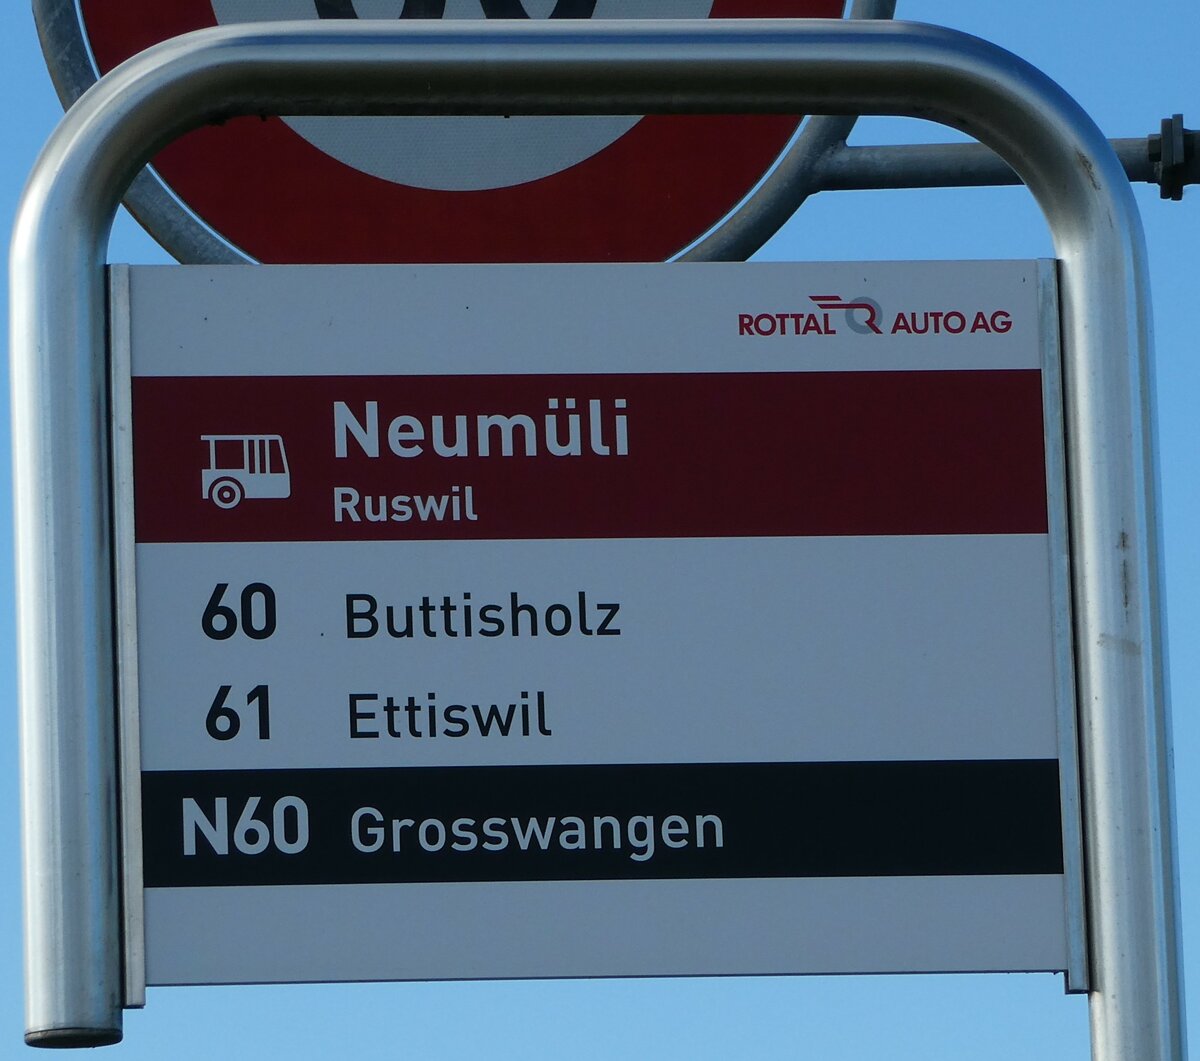 (241'783) - ROTTAL AUTO AG-Haltestellenschild - Ruswil, Neumli - am 22. Oktober 2022